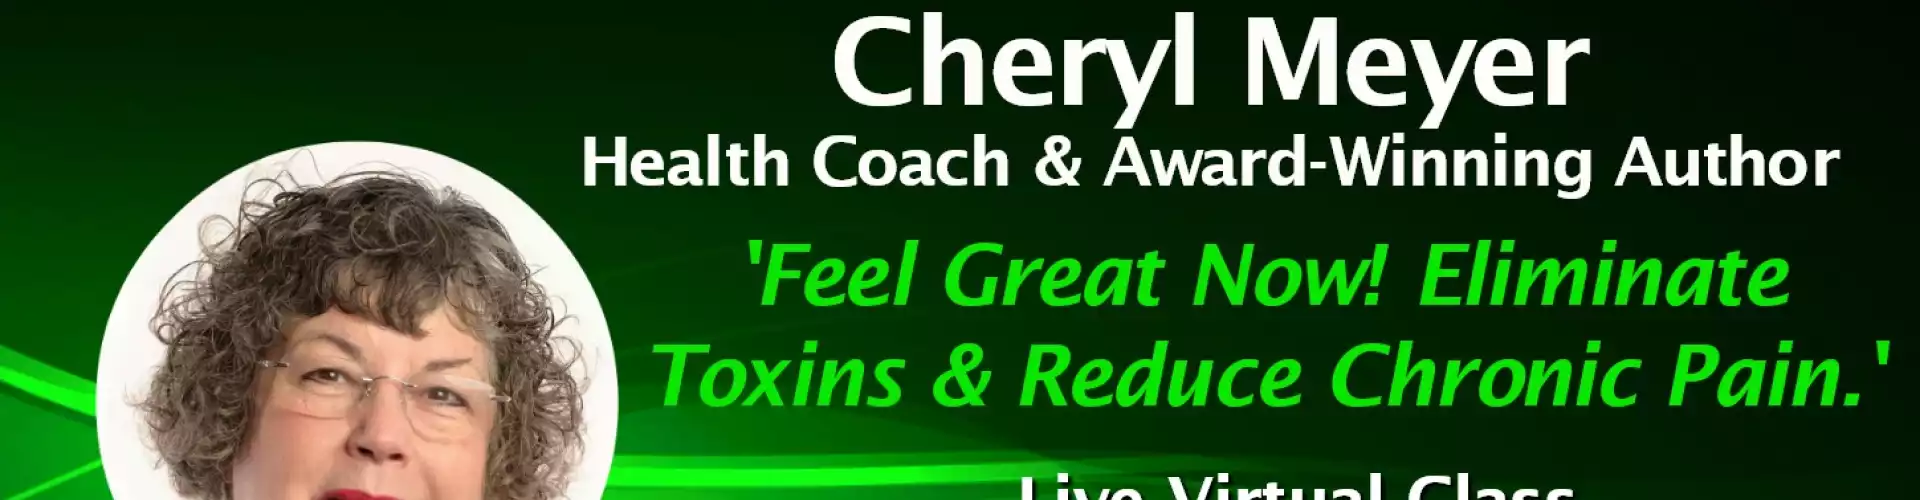 Feel Great Now! Eliminate Toxins & Reduce Chronic Pain w/WU Expert Cheryl Meyer